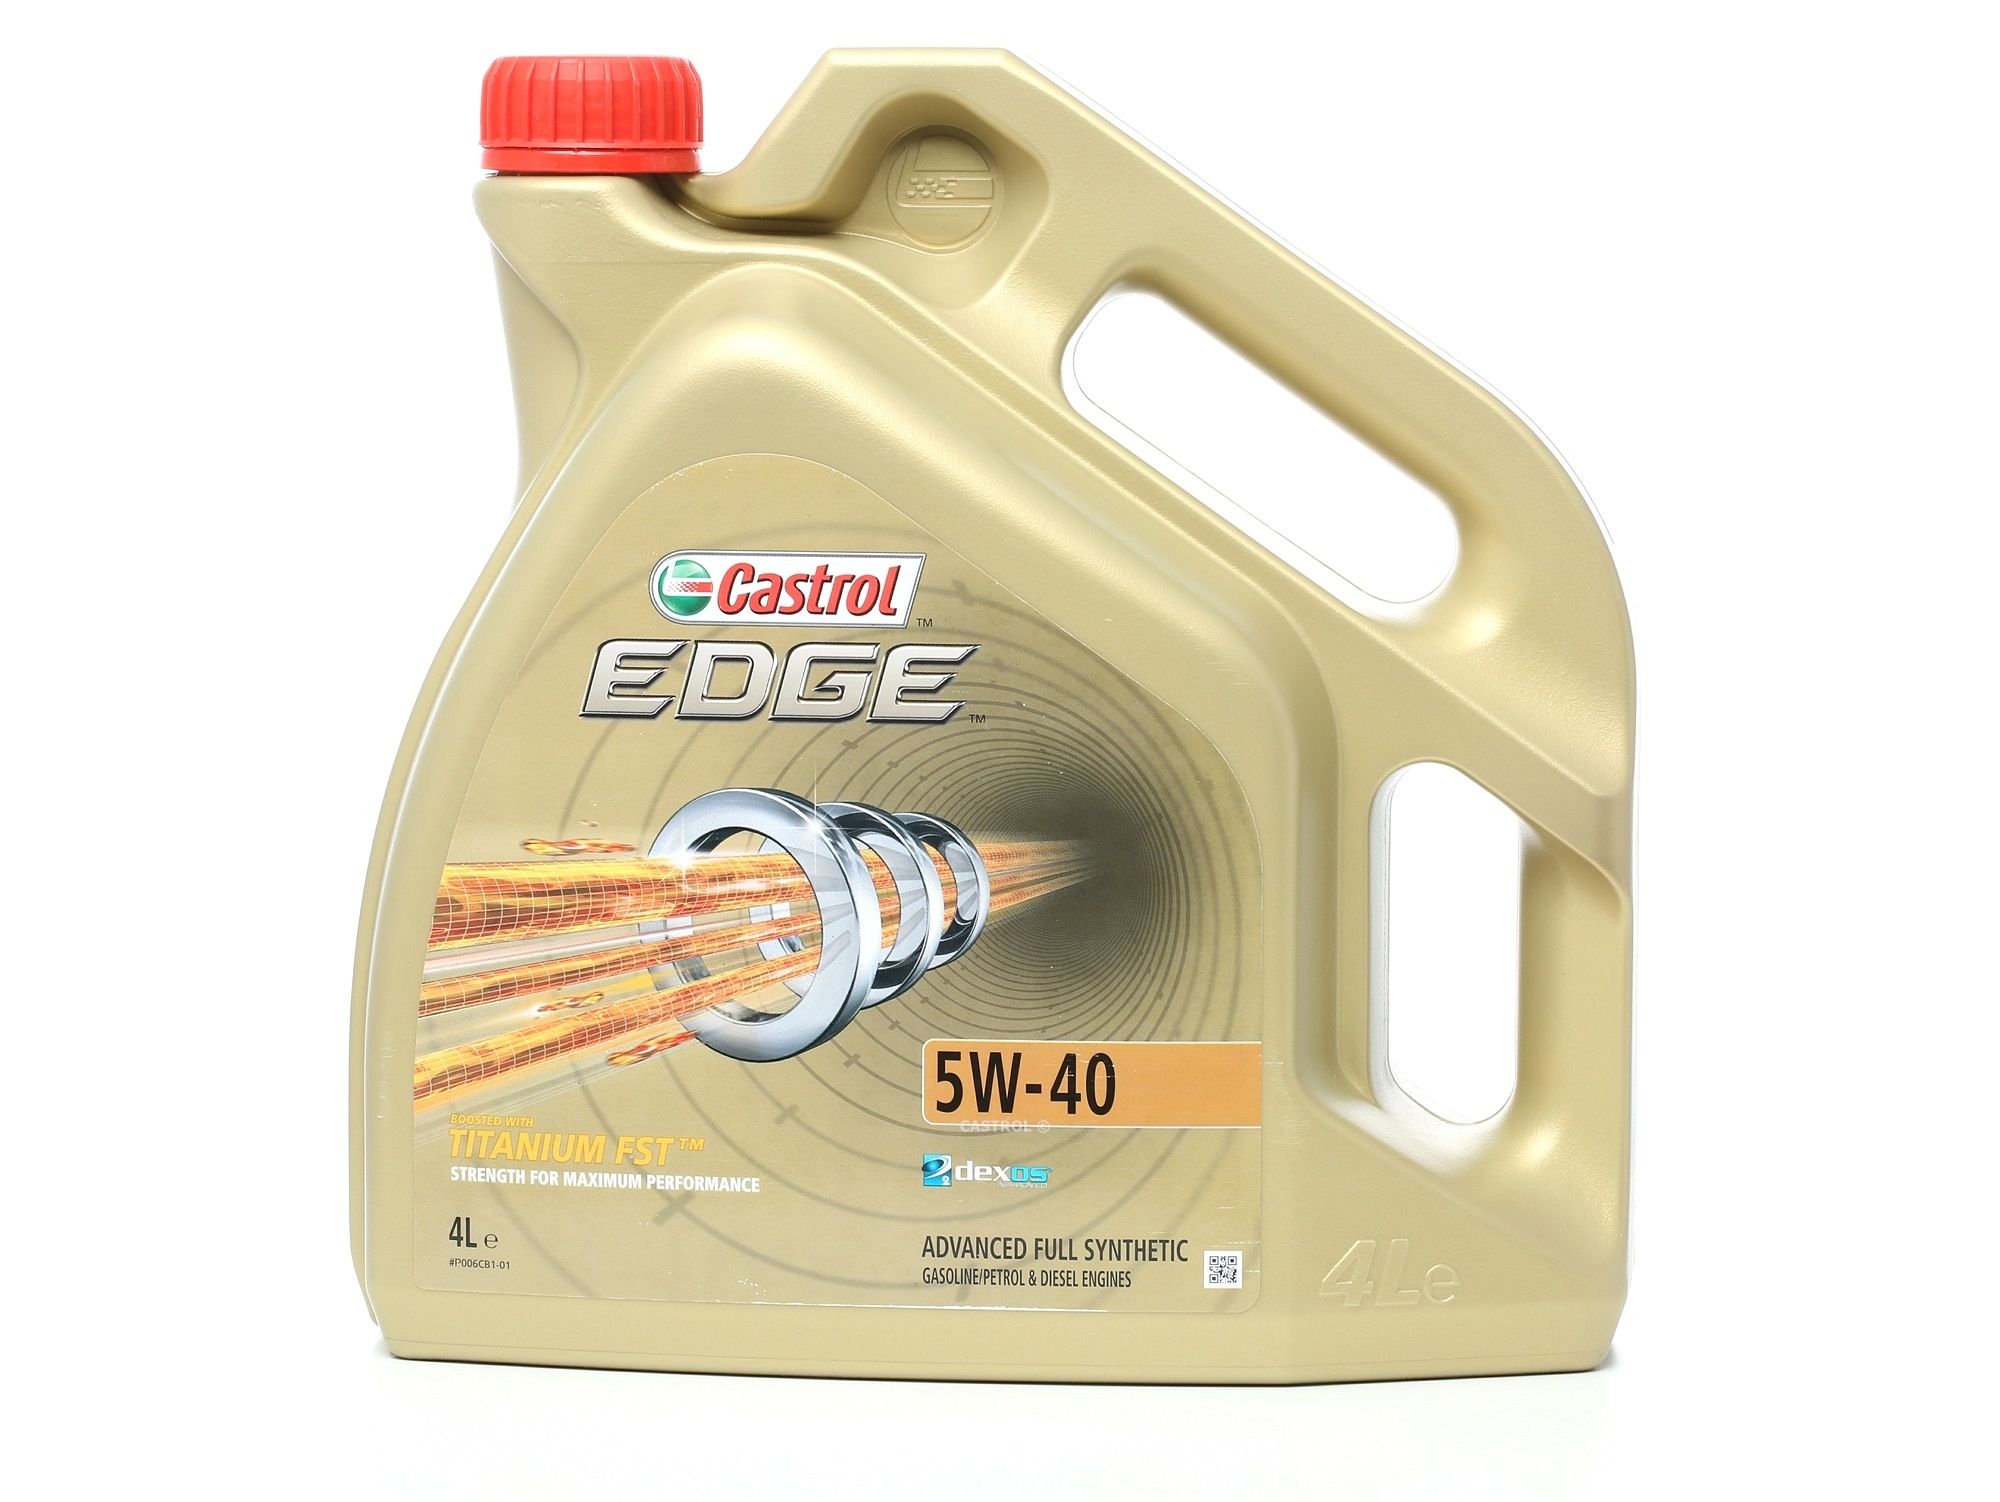 CASTROL EDGE 5W-40, 4L, Volledig synthetisch Olie 1535F3 koop goedkoop